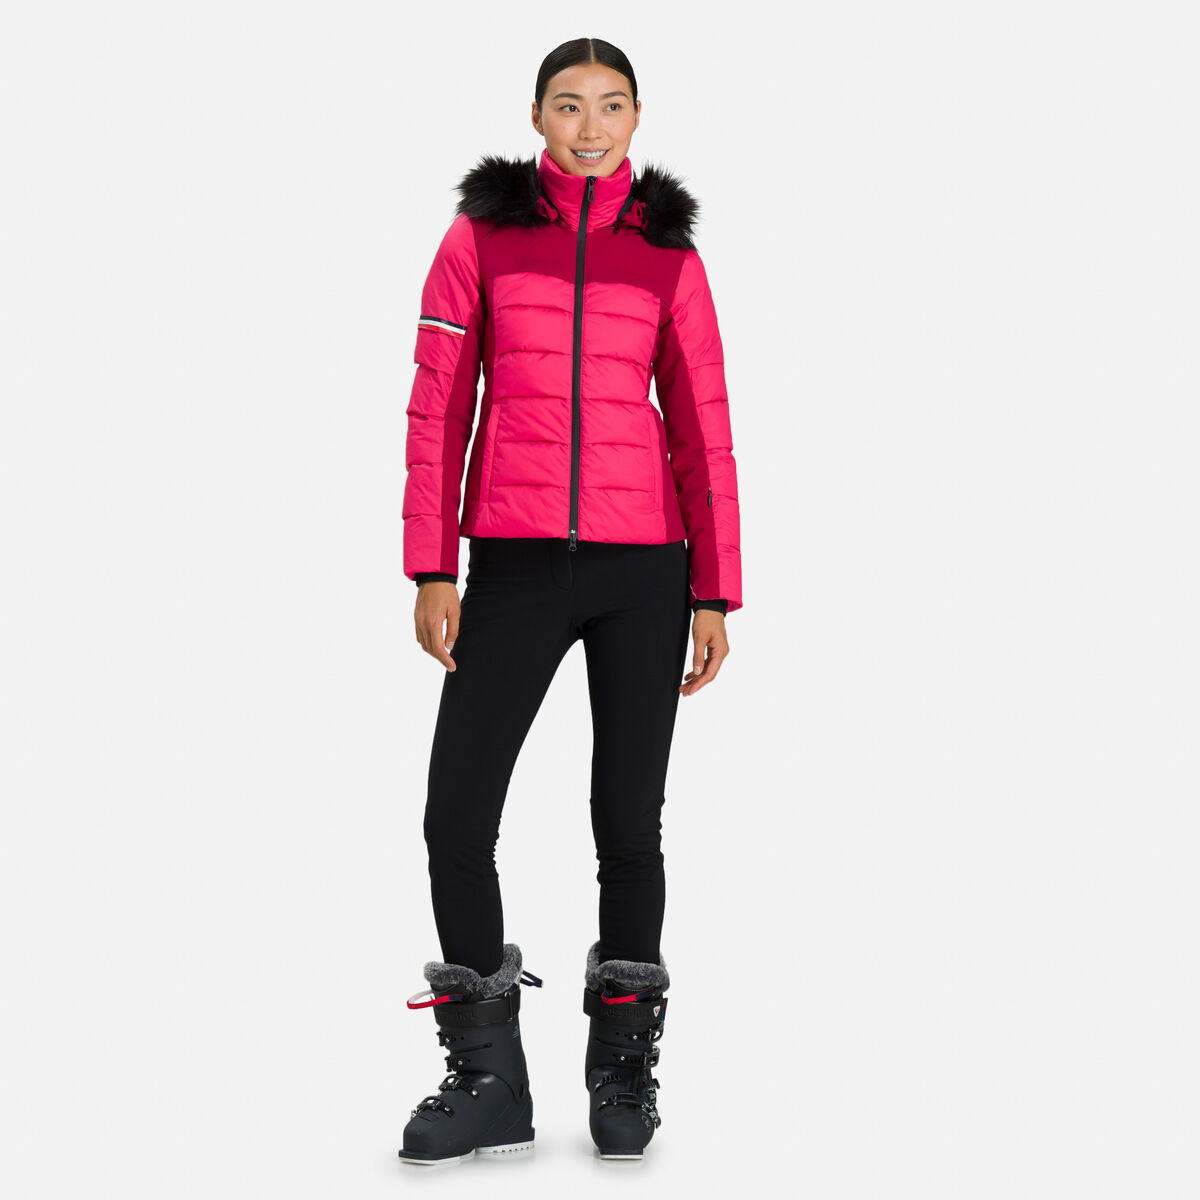 Women's Surfusion ski jacket